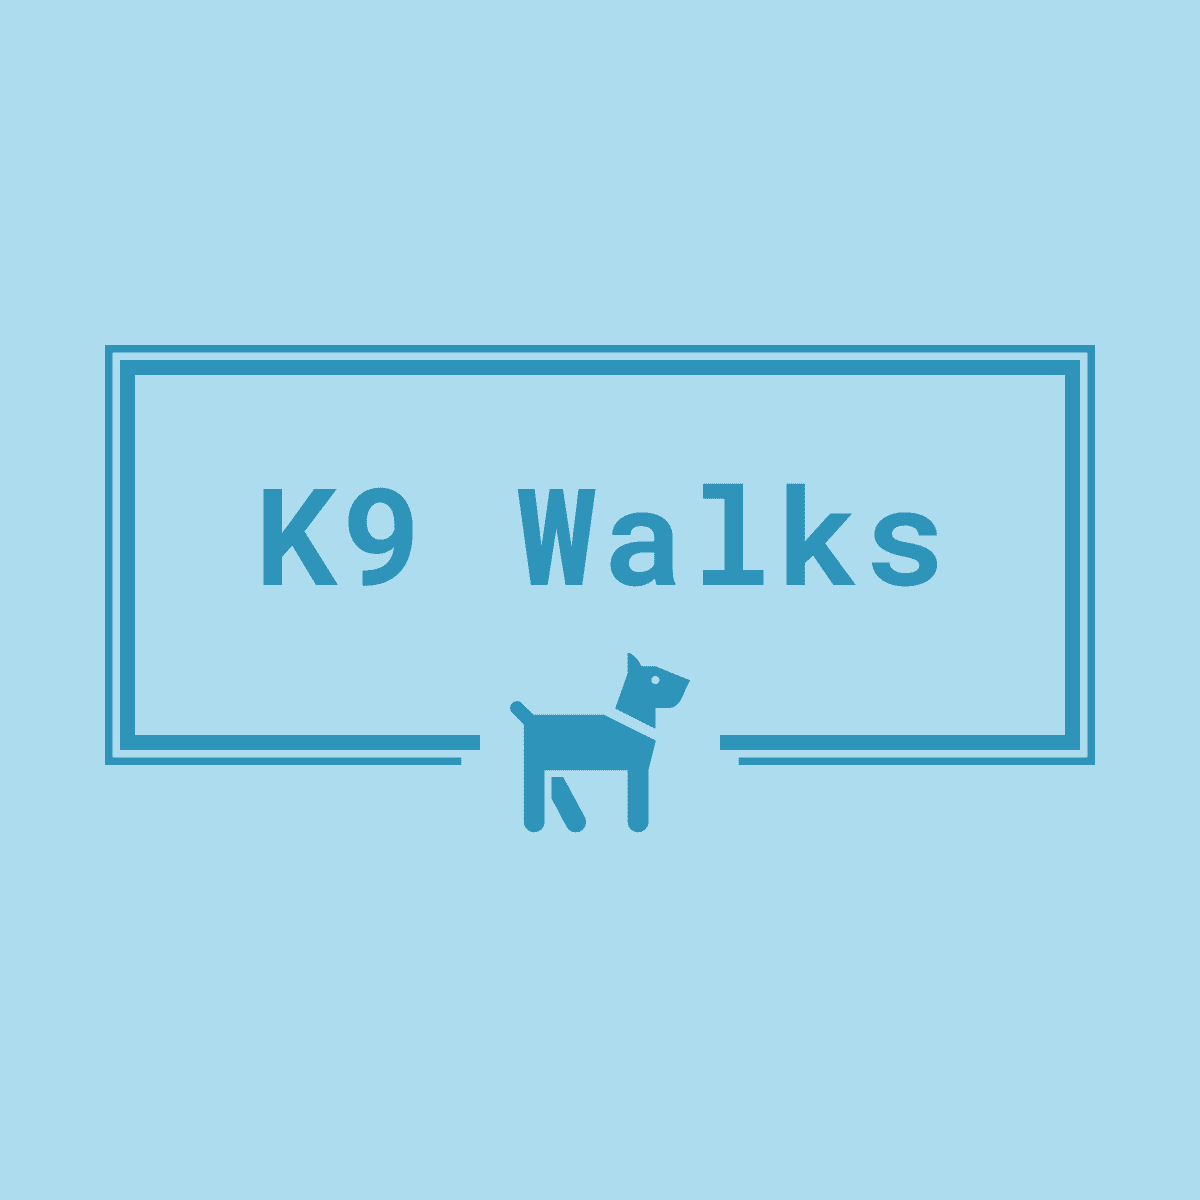 K9 Walks